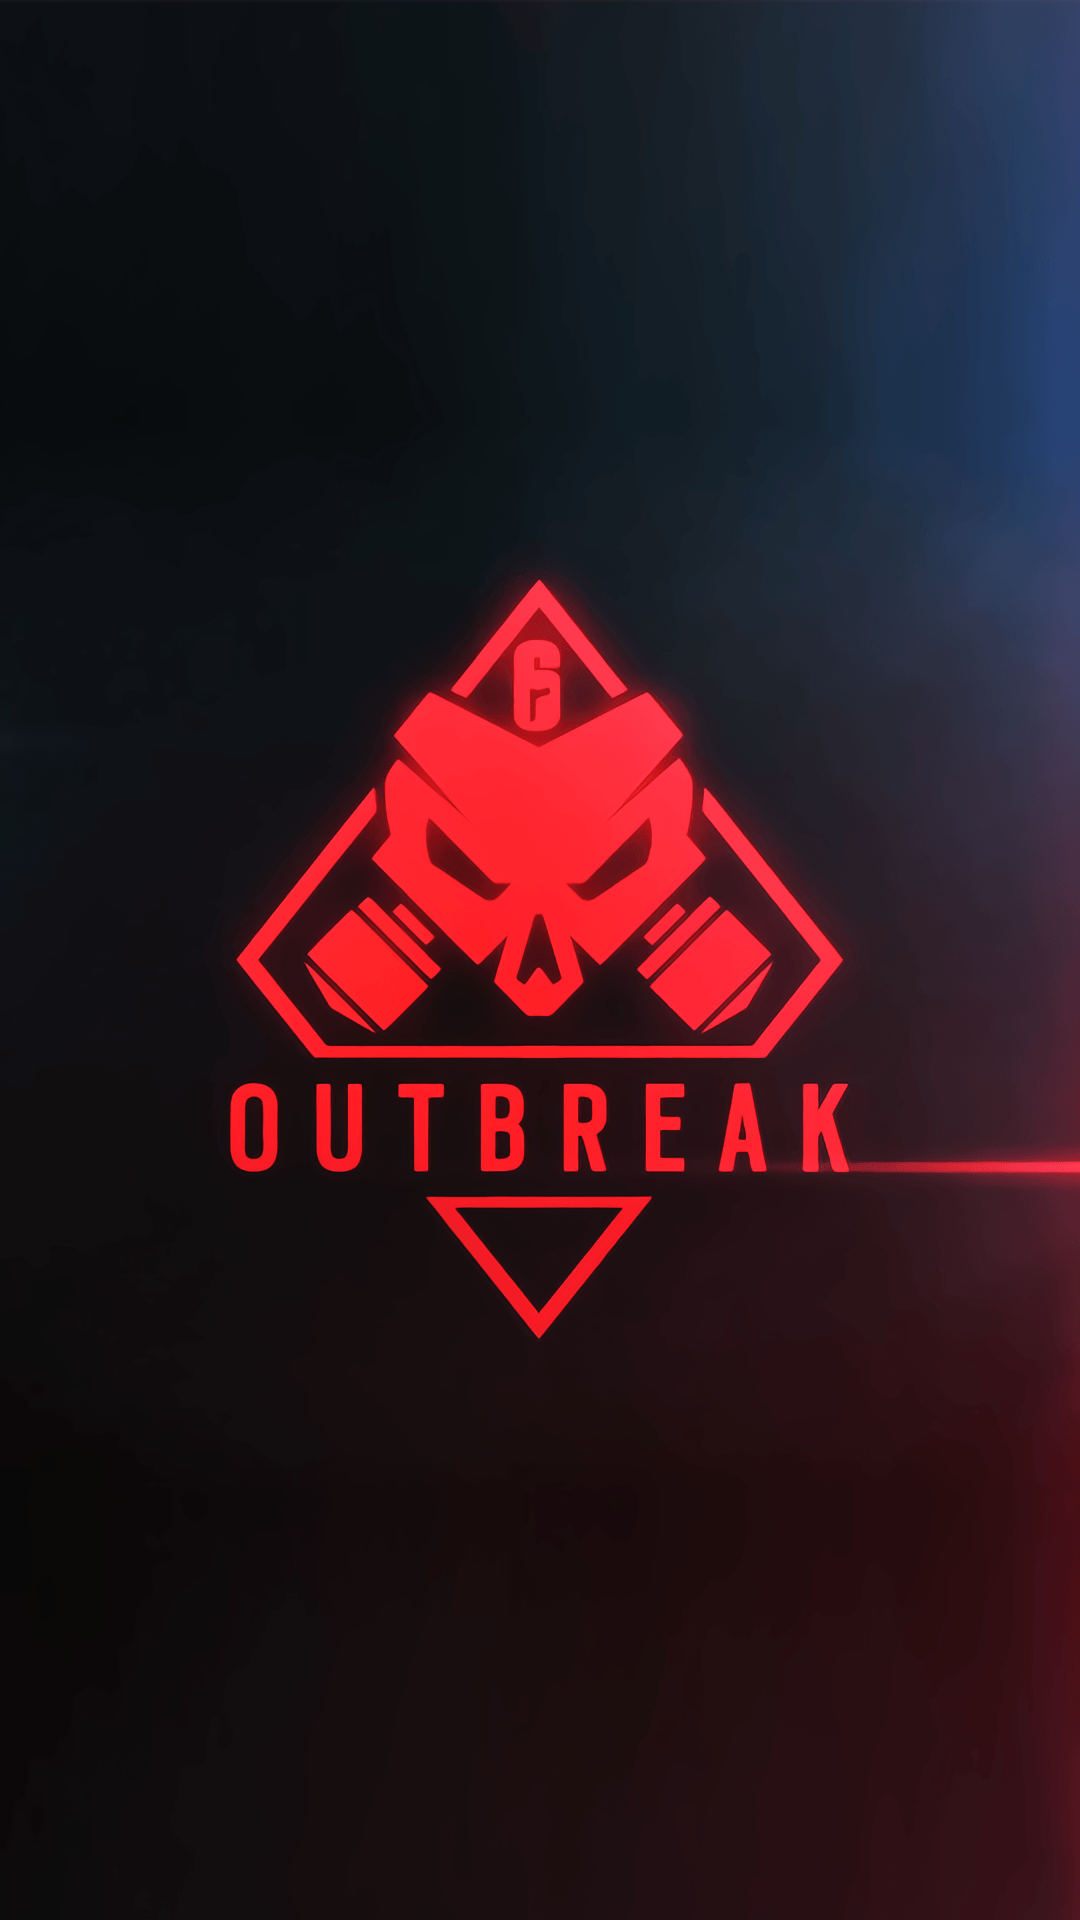 I made an Outbreak Wallpaper